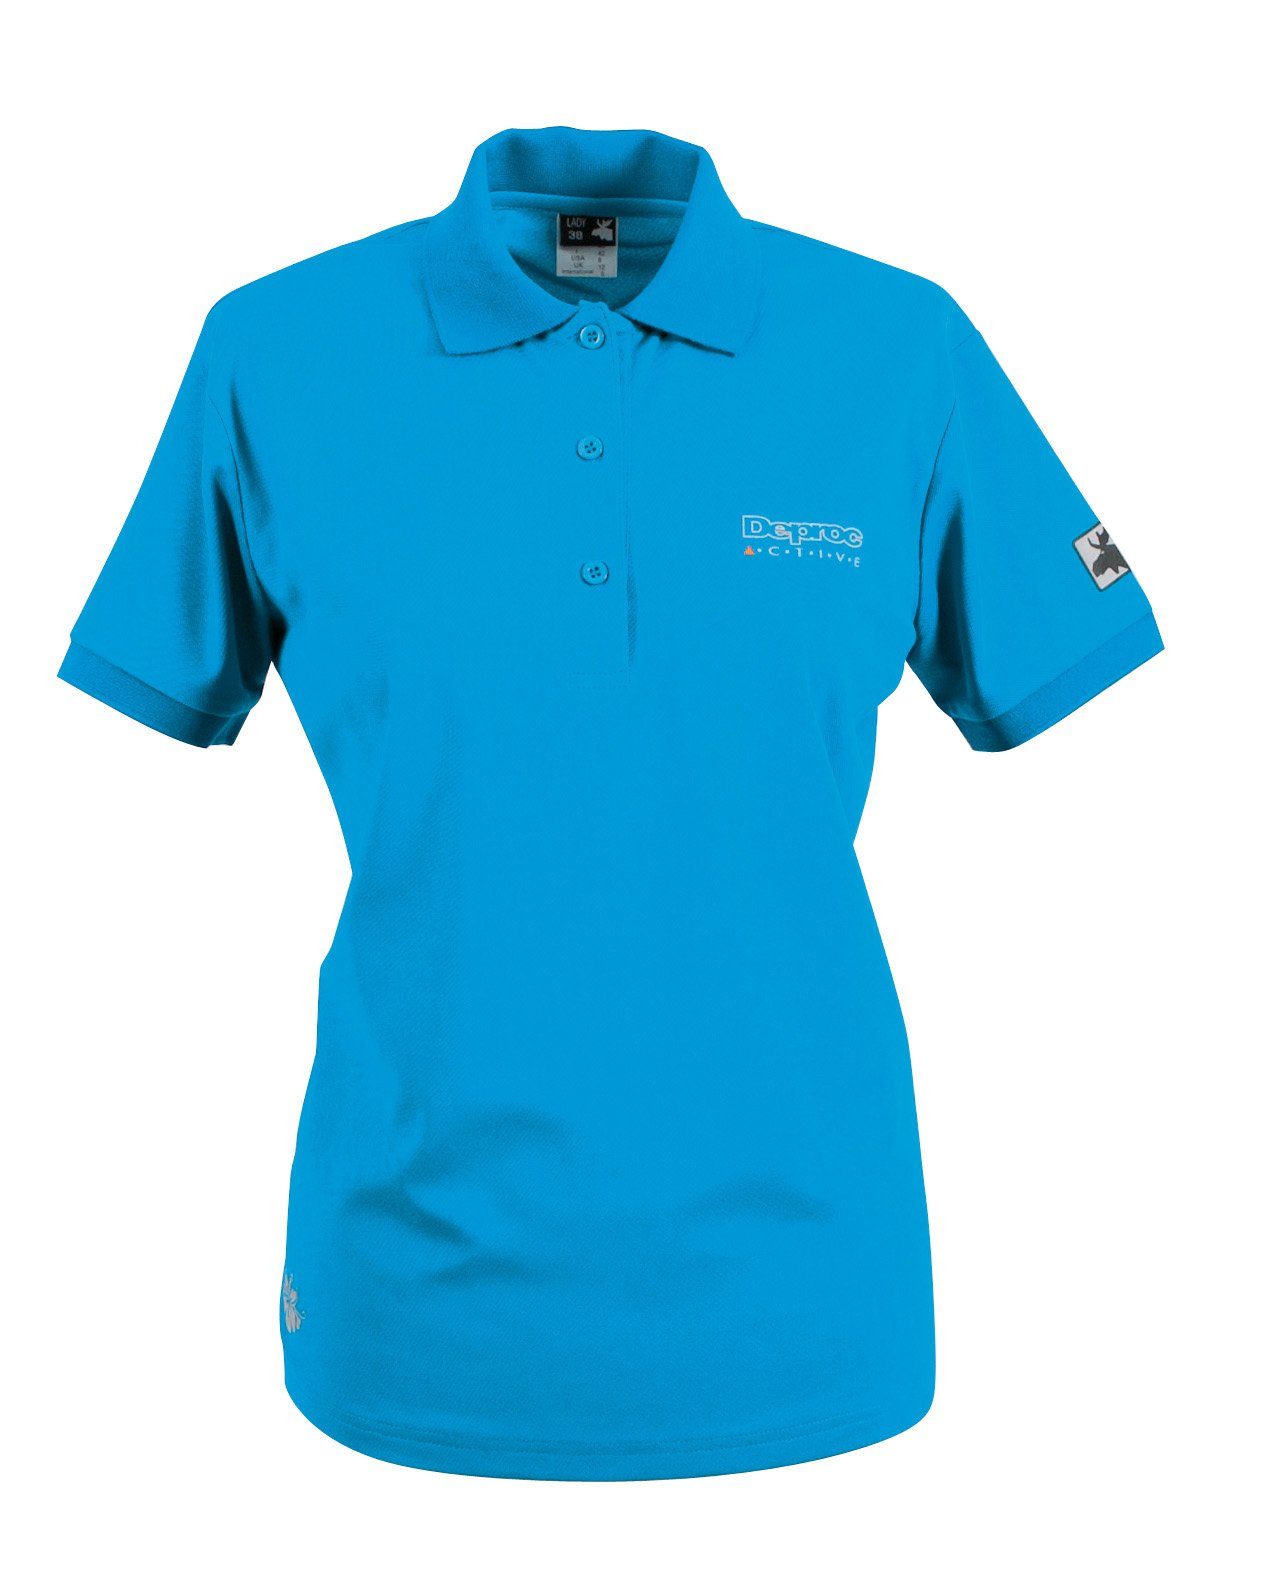 DEPROC Active Poloshirt HEDLEY V NEW CS WOMEN auch in Großen Größen erhältlich light blue